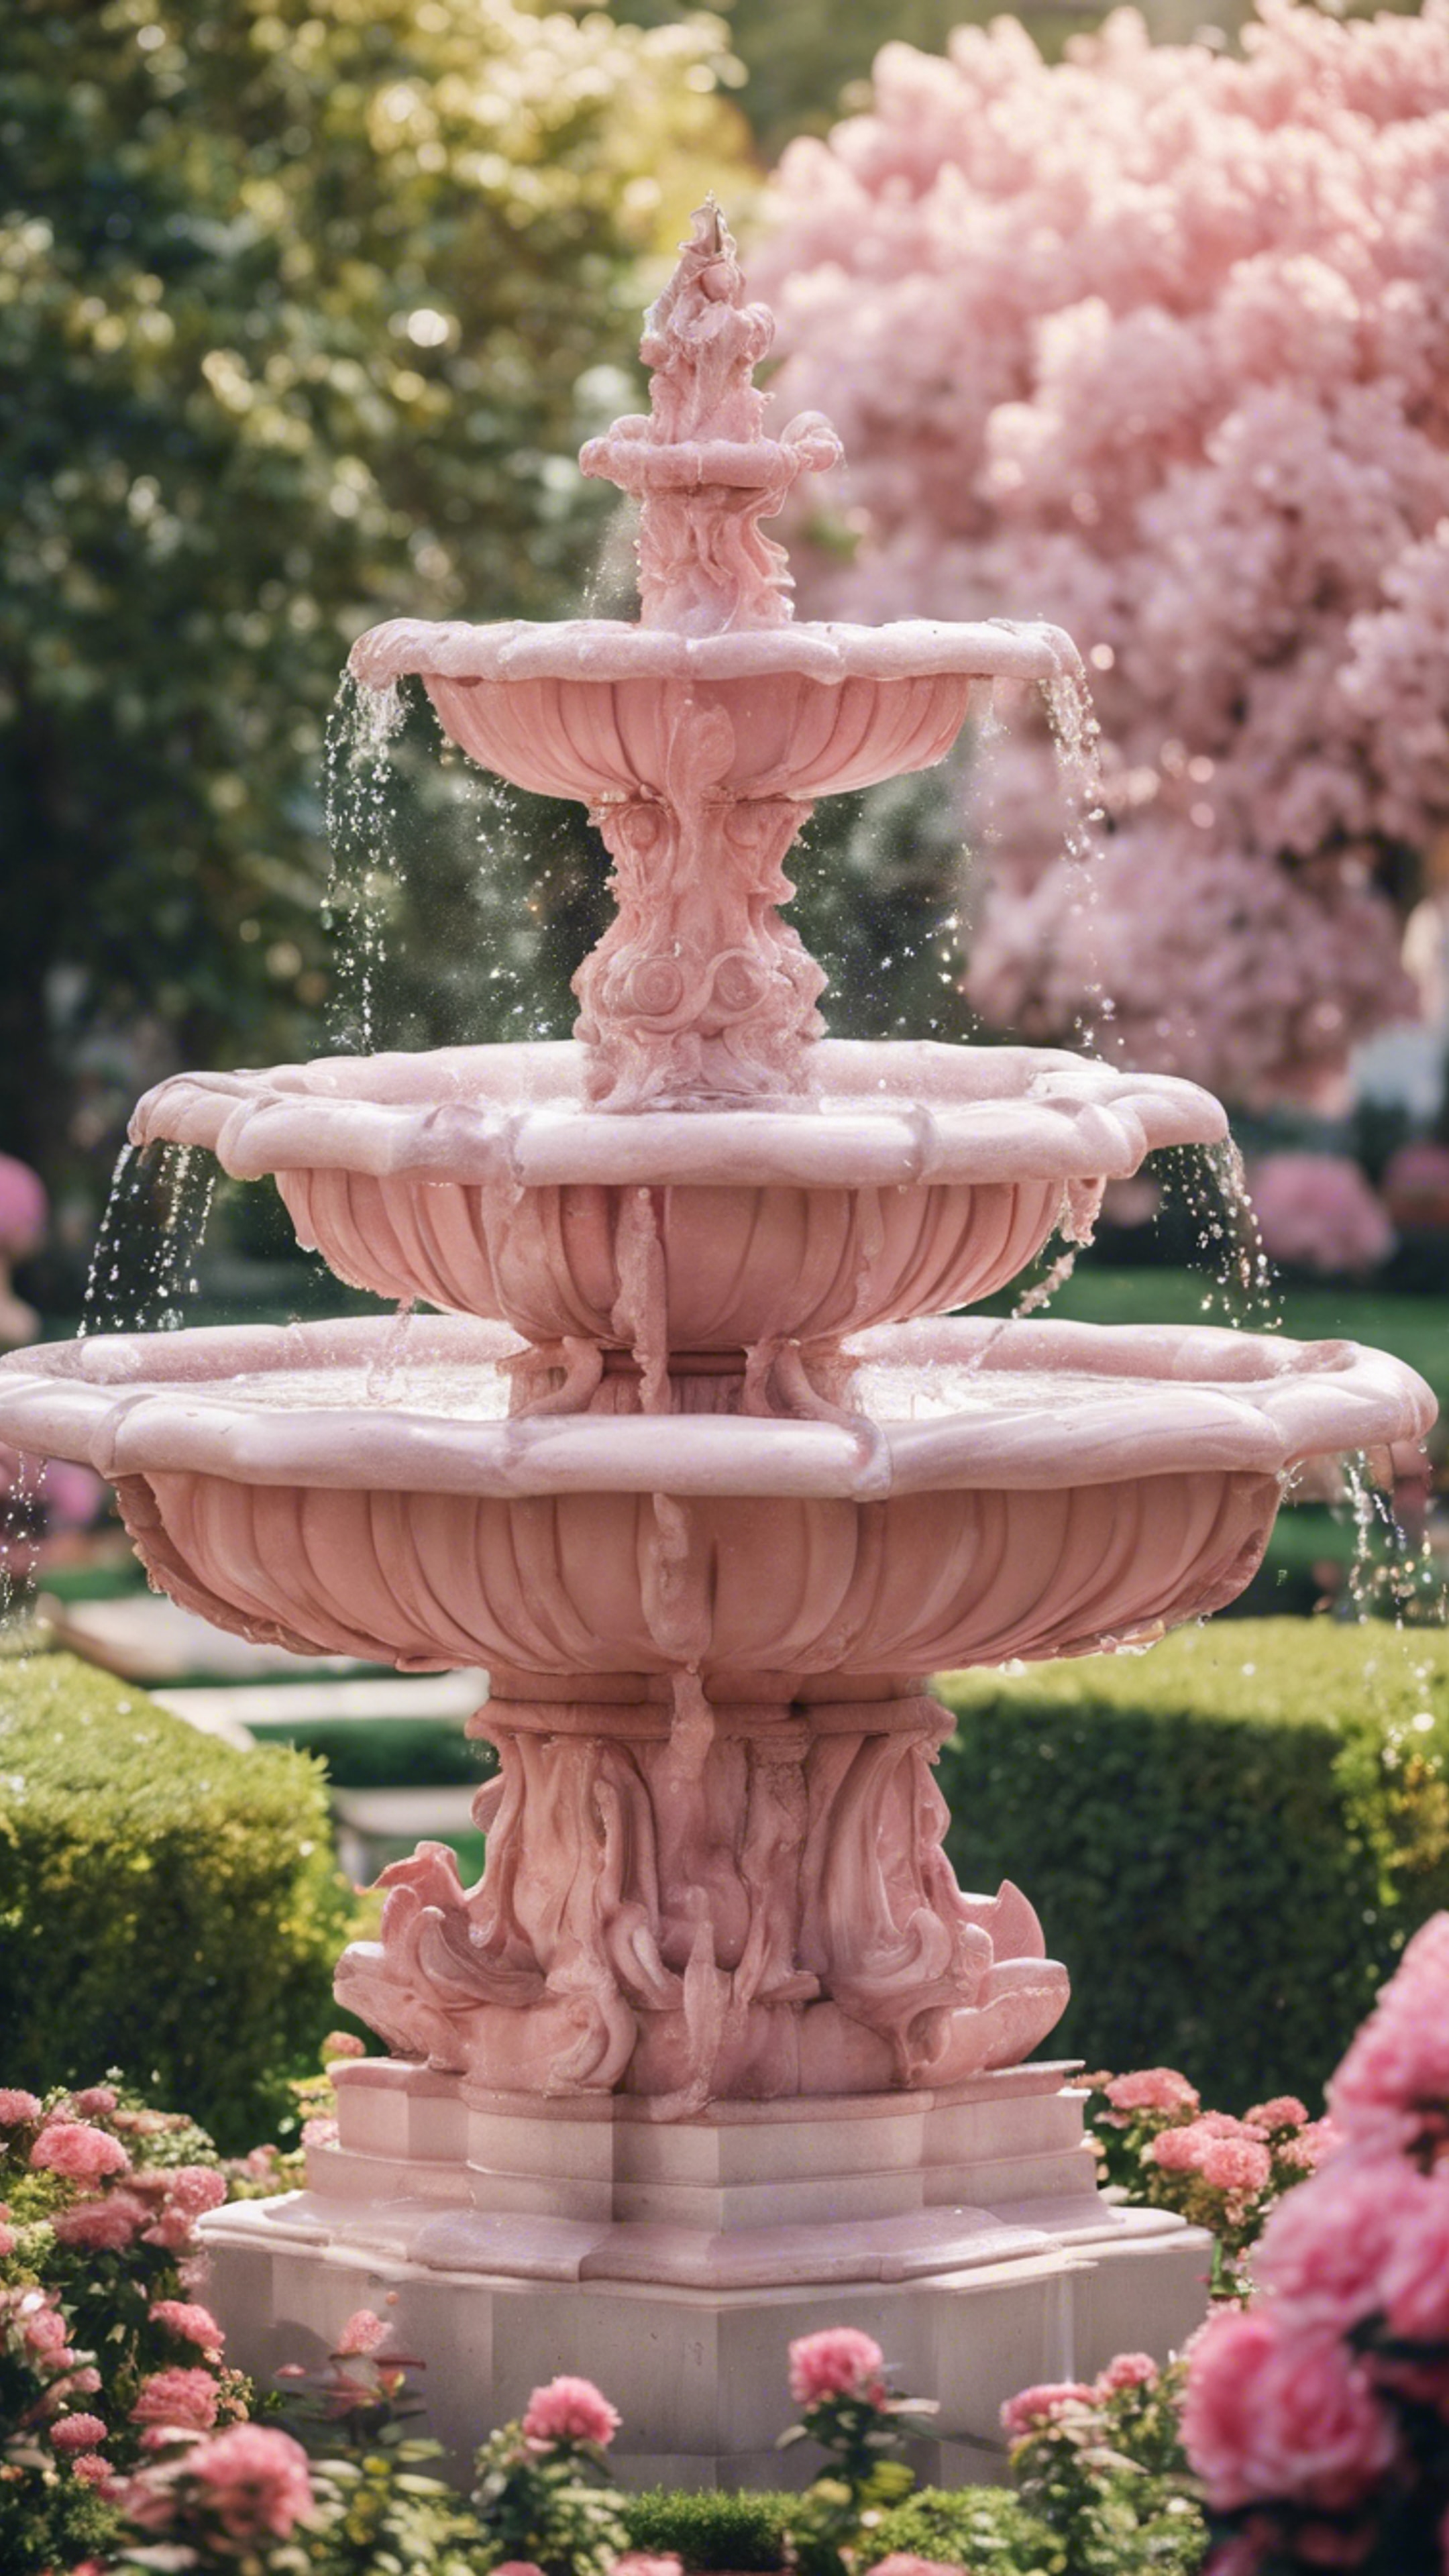 A fountain made of pink marble in an elegant flower garden. duvar kağıdı[73b566b49d564d04a87c]